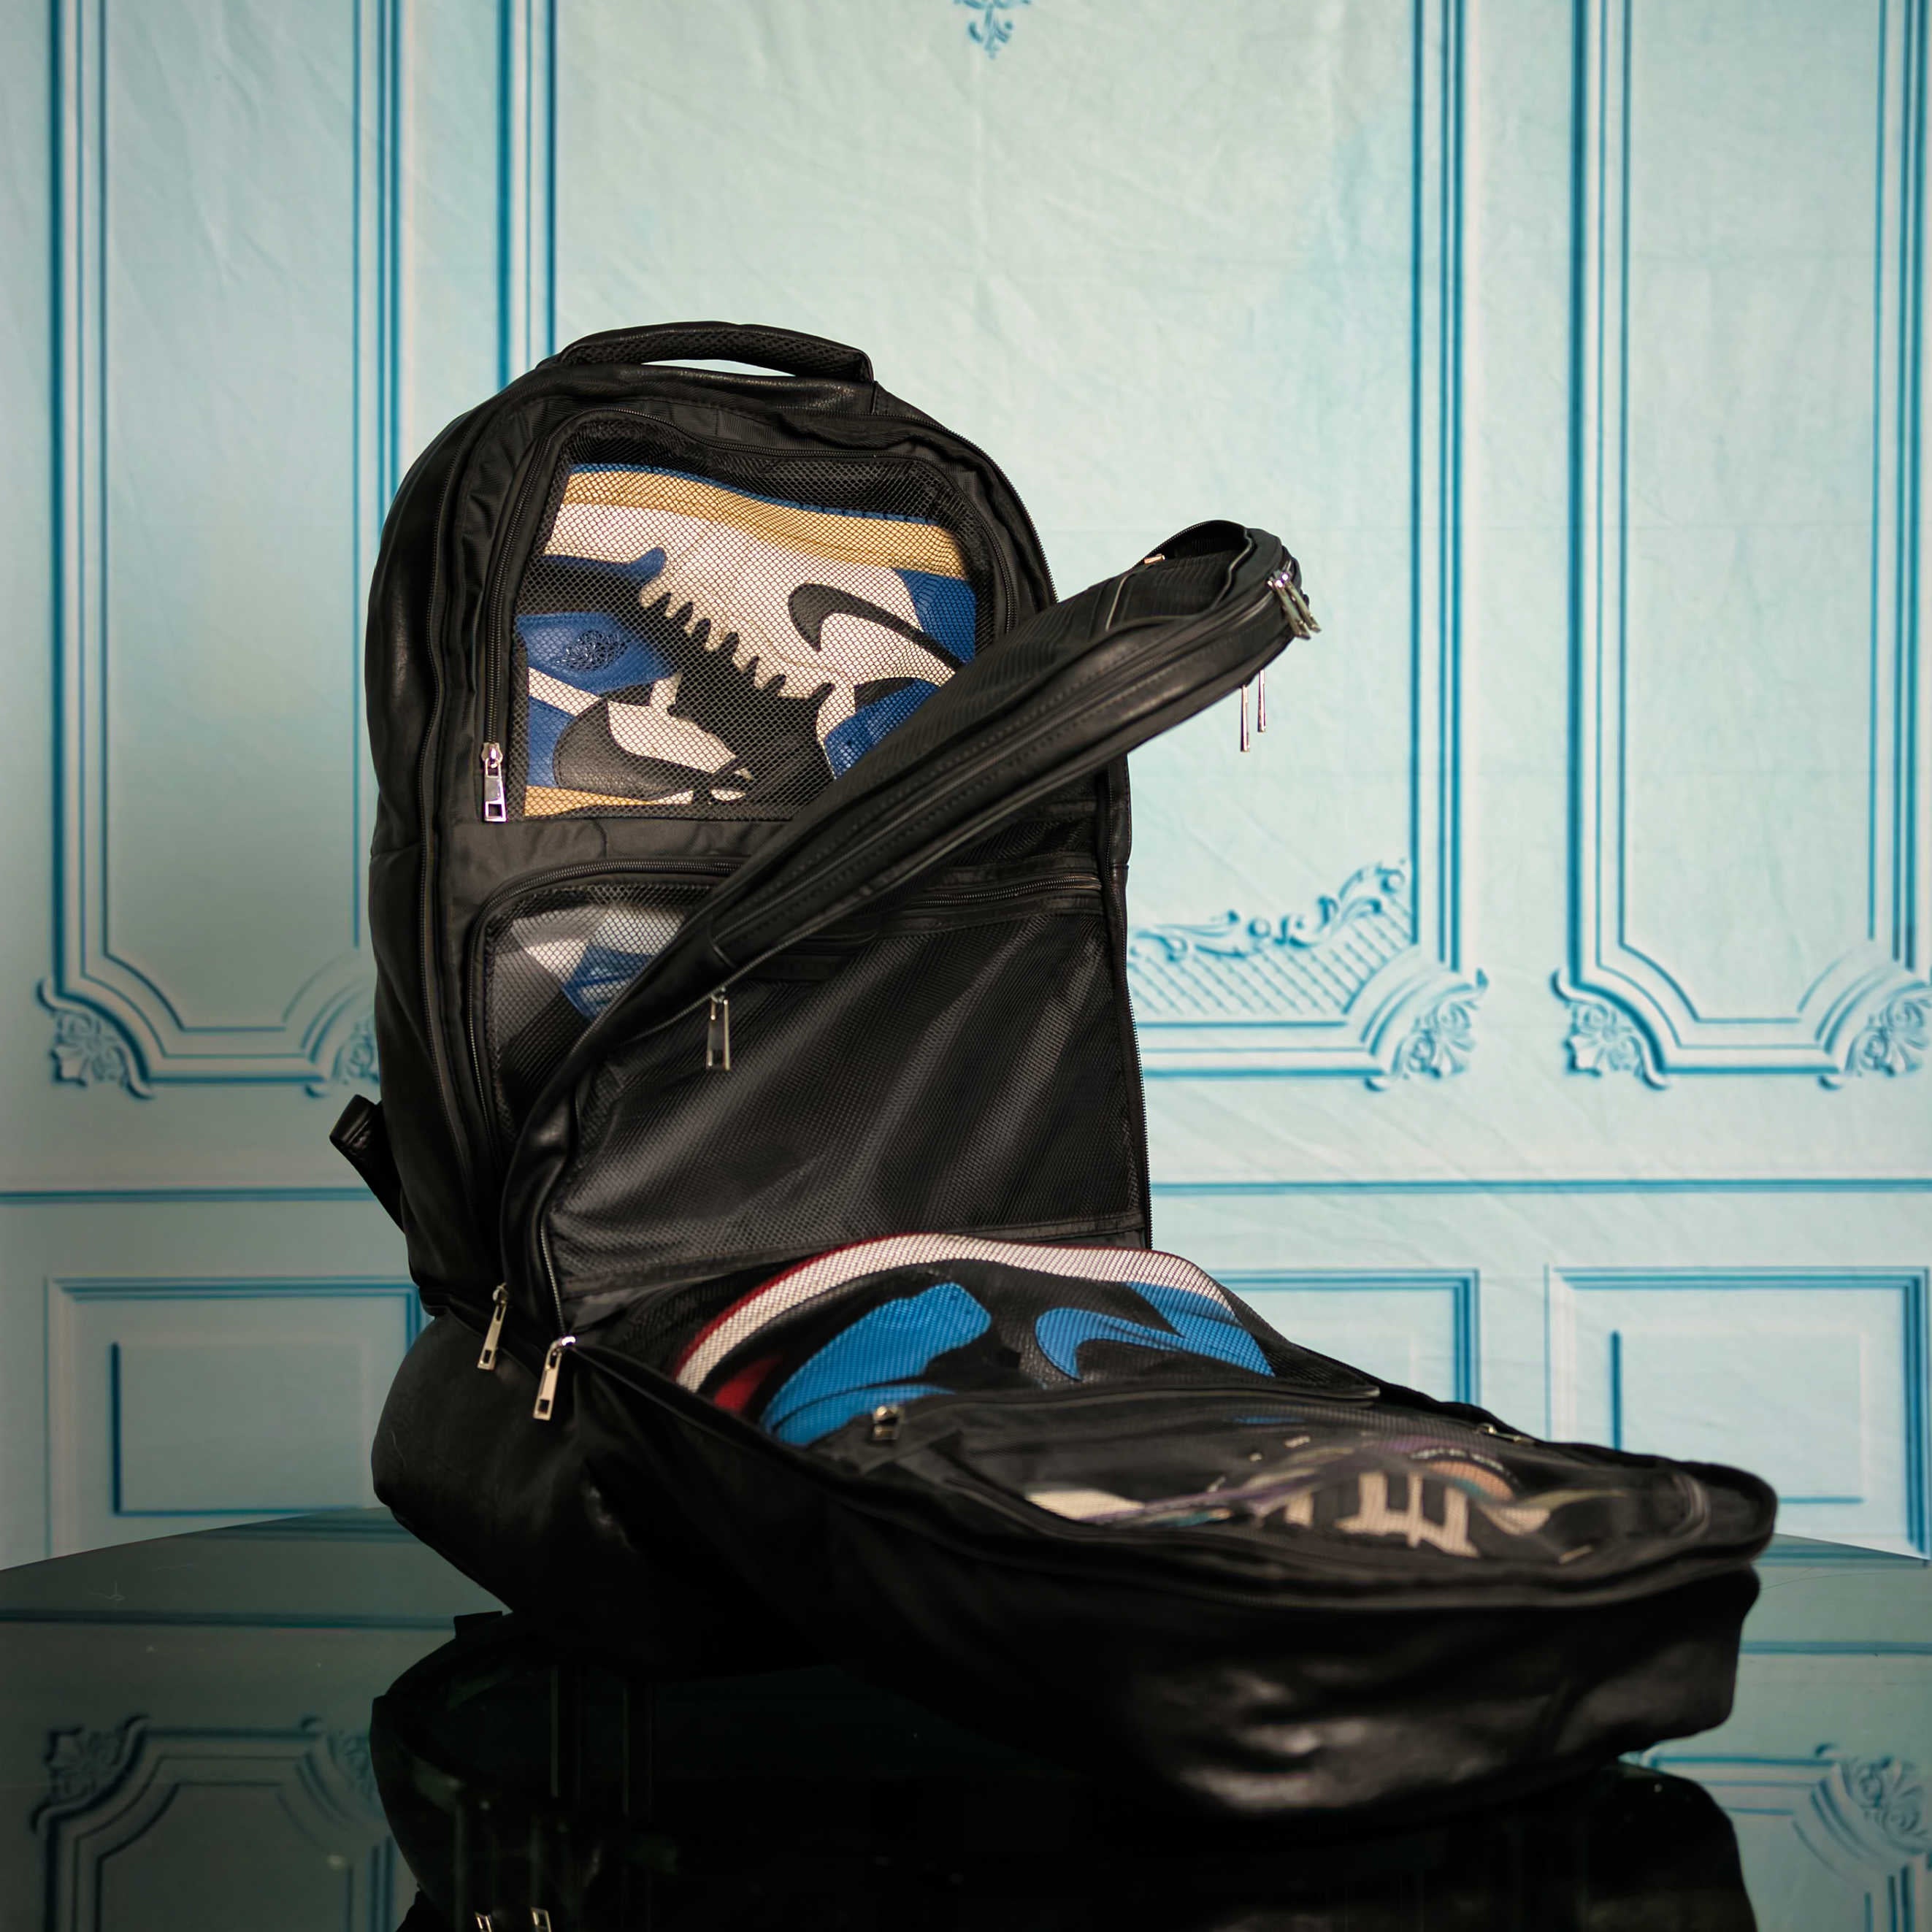 Black Tumbled Leather Signature Bag Set (Signature and Duffle Bag) - Sole Premise